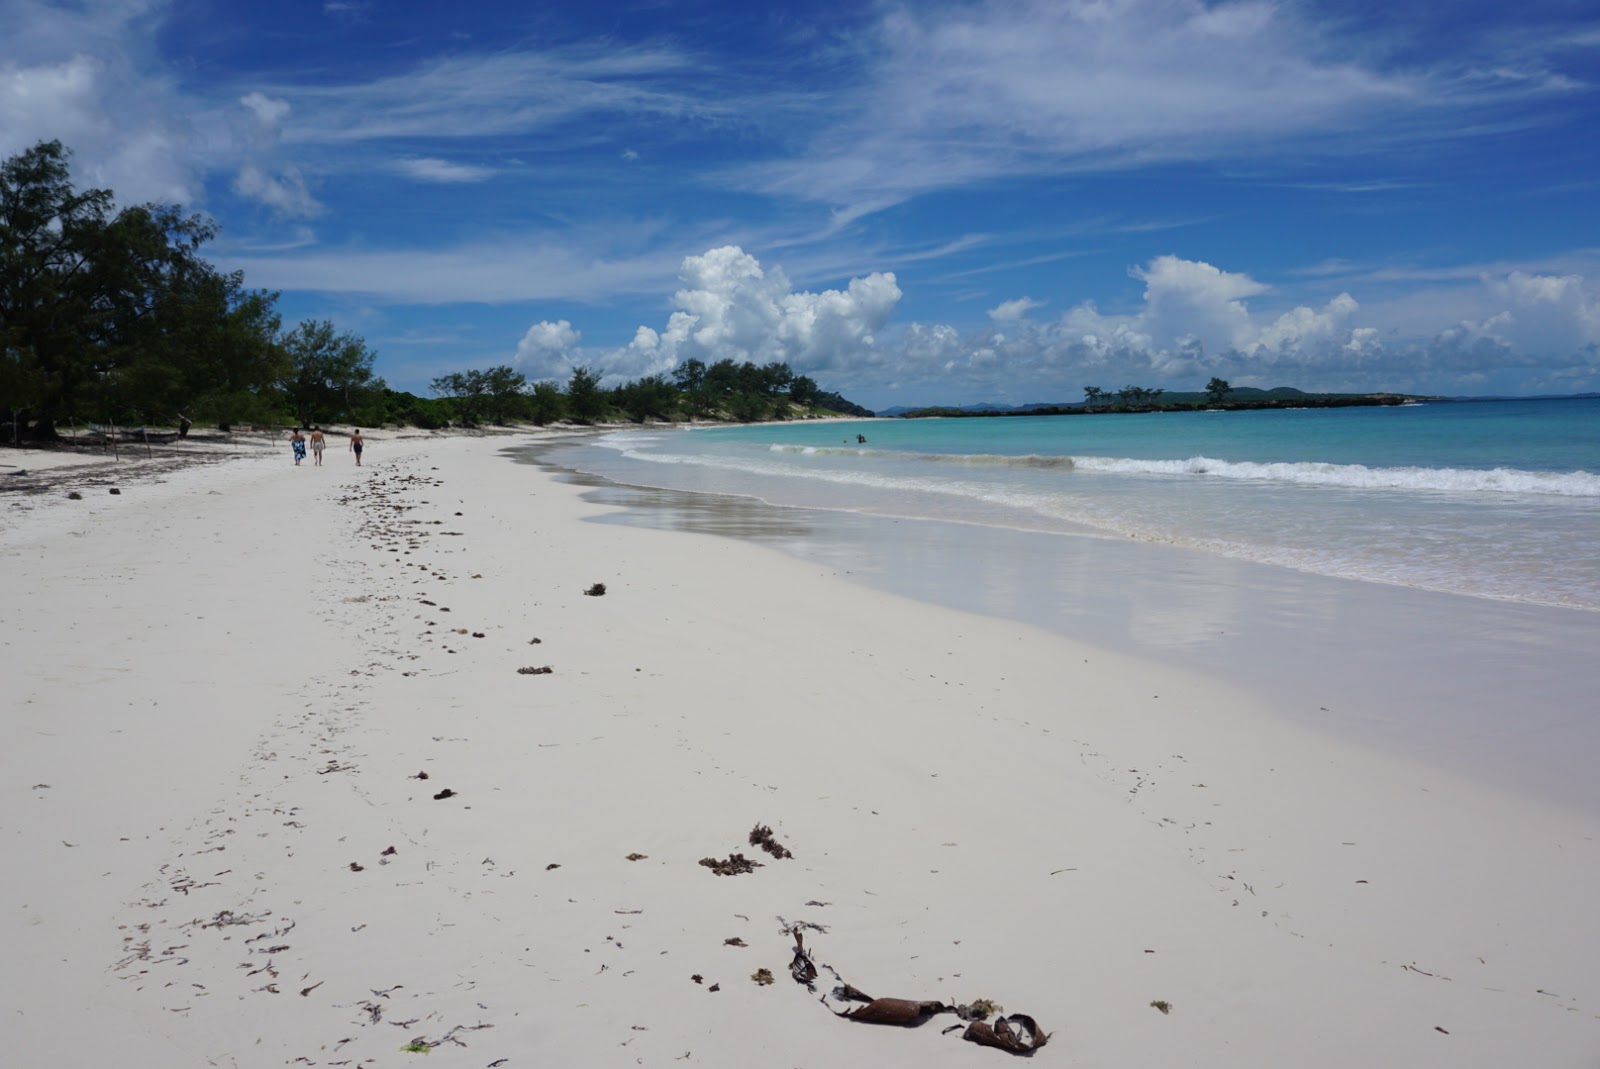 Foto di Sakalava beach con una superficie del sabbia bianca